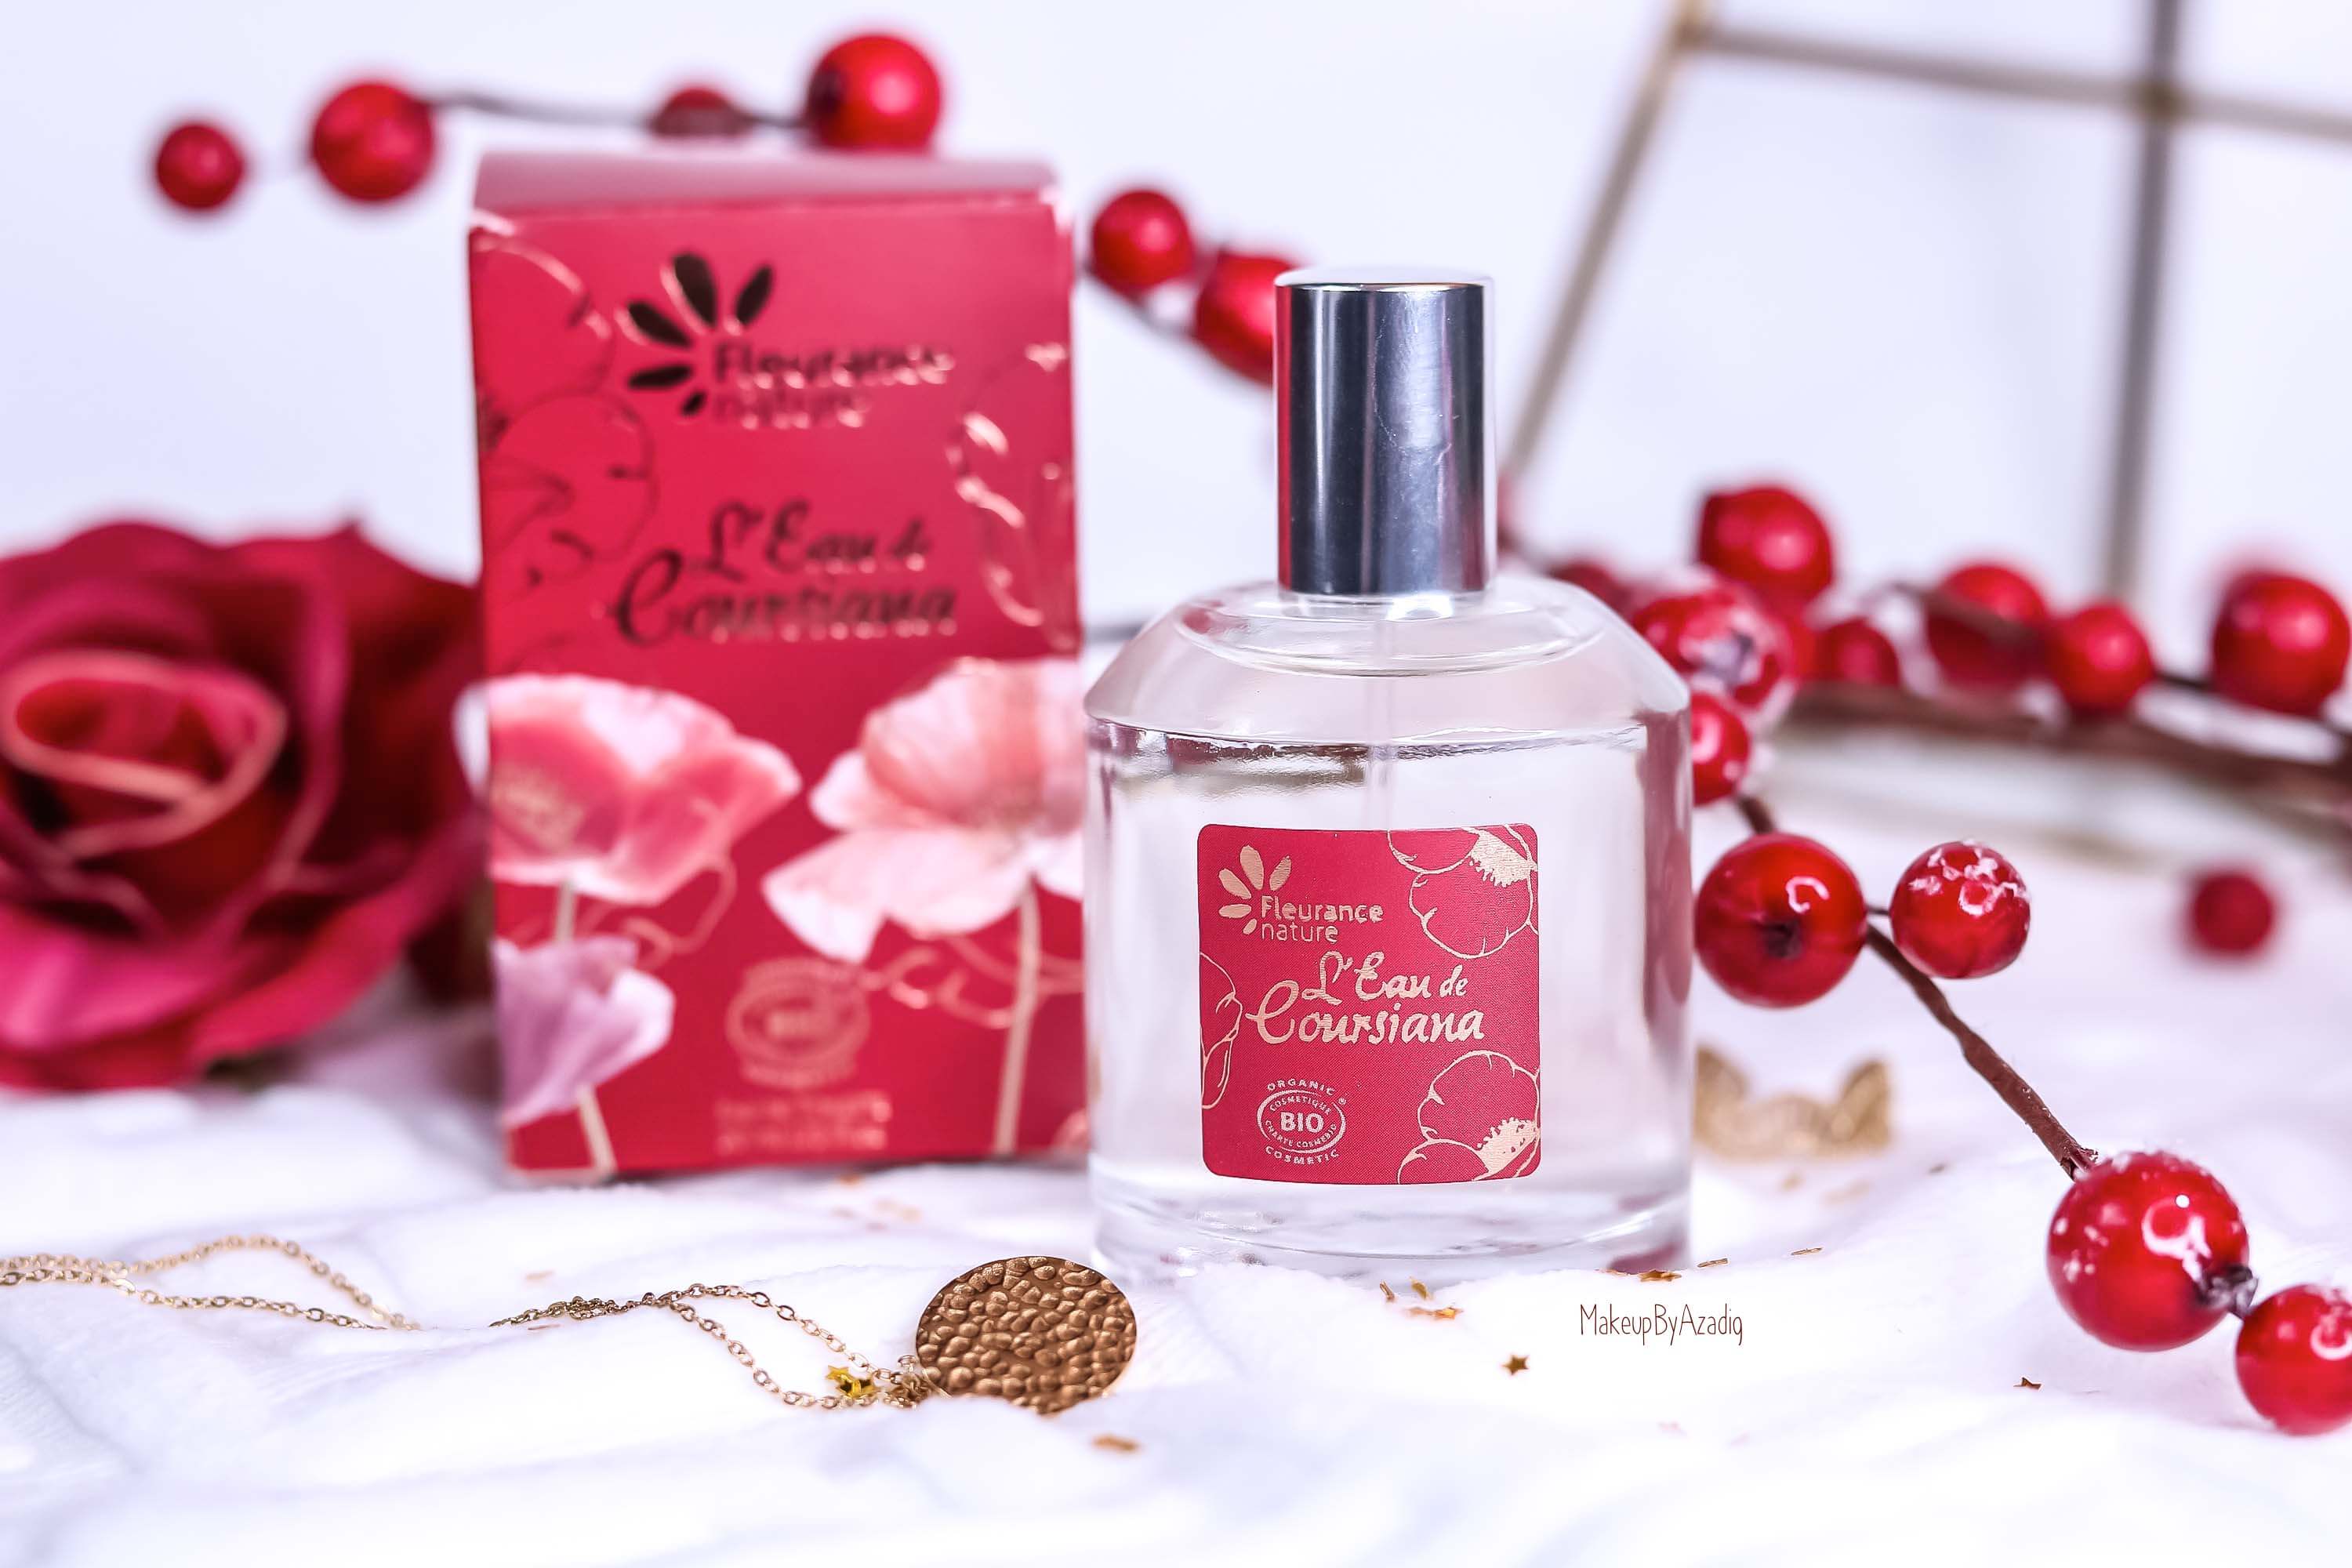 revue-parfum-bio-eau-coursiana-fleurance-nature-organic-cosmetic-makeupbyazadig-avis-prix-promo-miniature